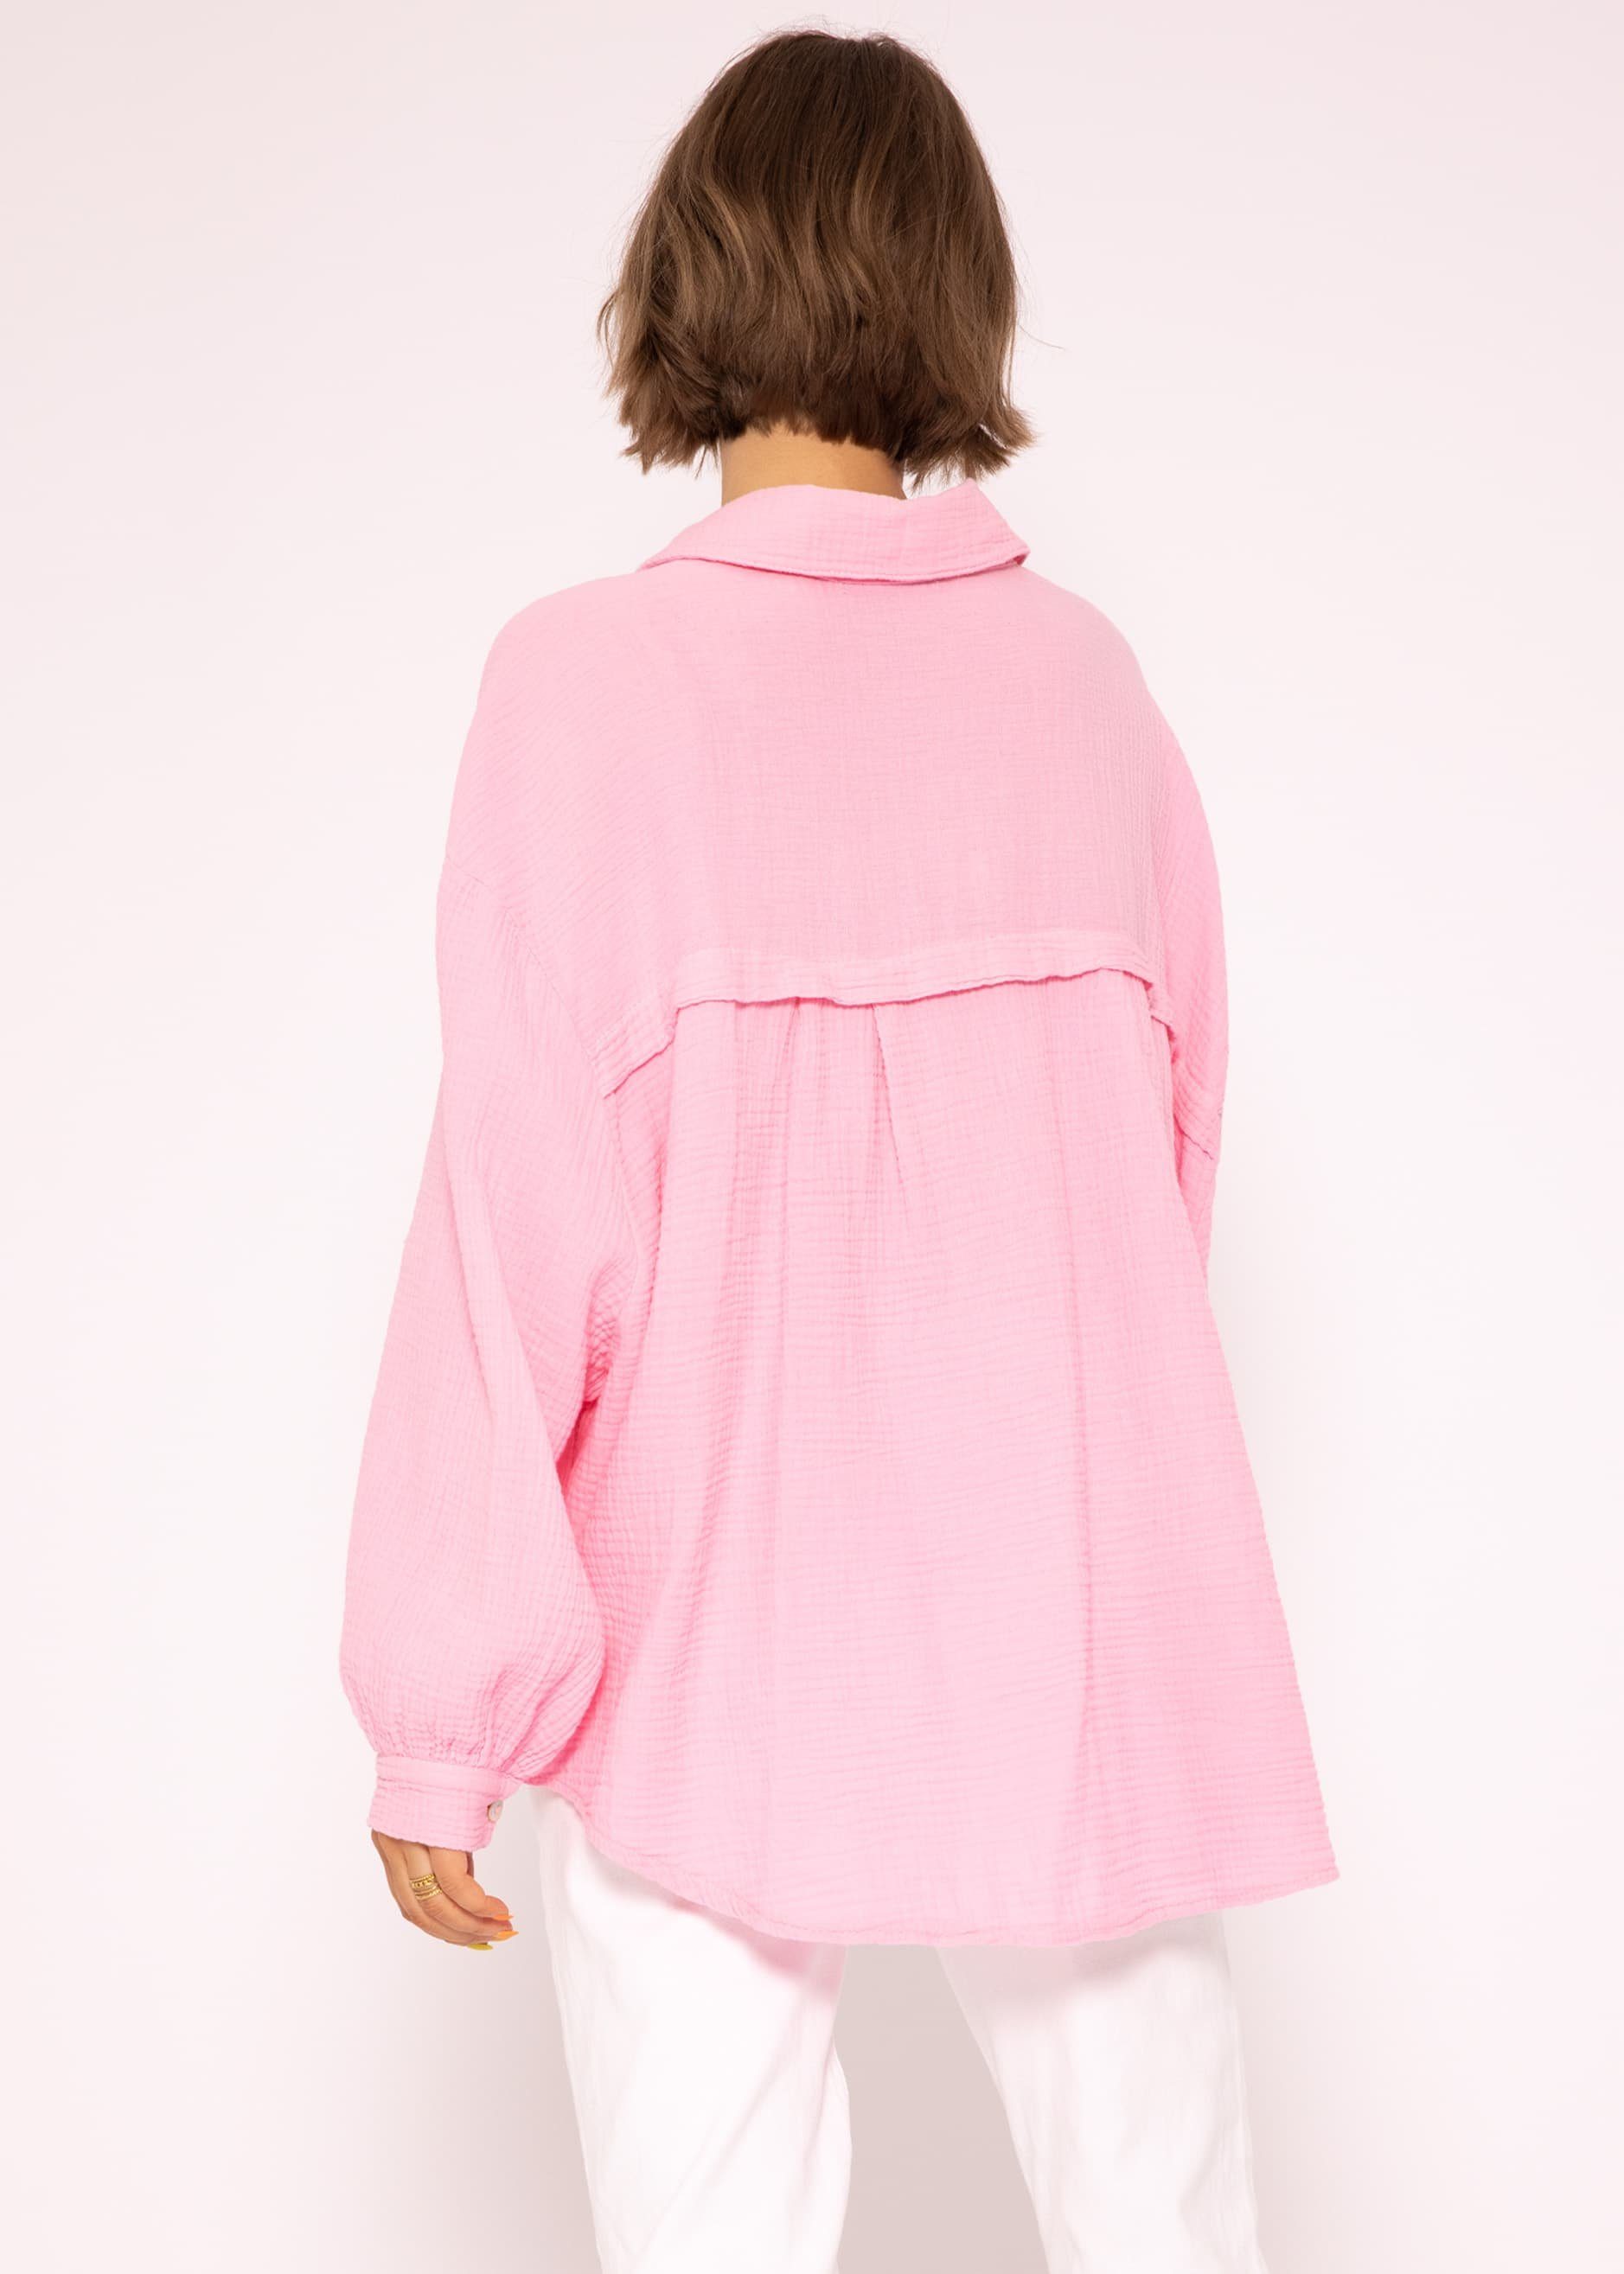 Hemdbluse Longbluse Bluse mit Babyrosa Baumwolle lang Damen 36-48) V-Ausschnitt, Langarm (Gr. SASSYCLASSY Musselin aus Size Oversize One